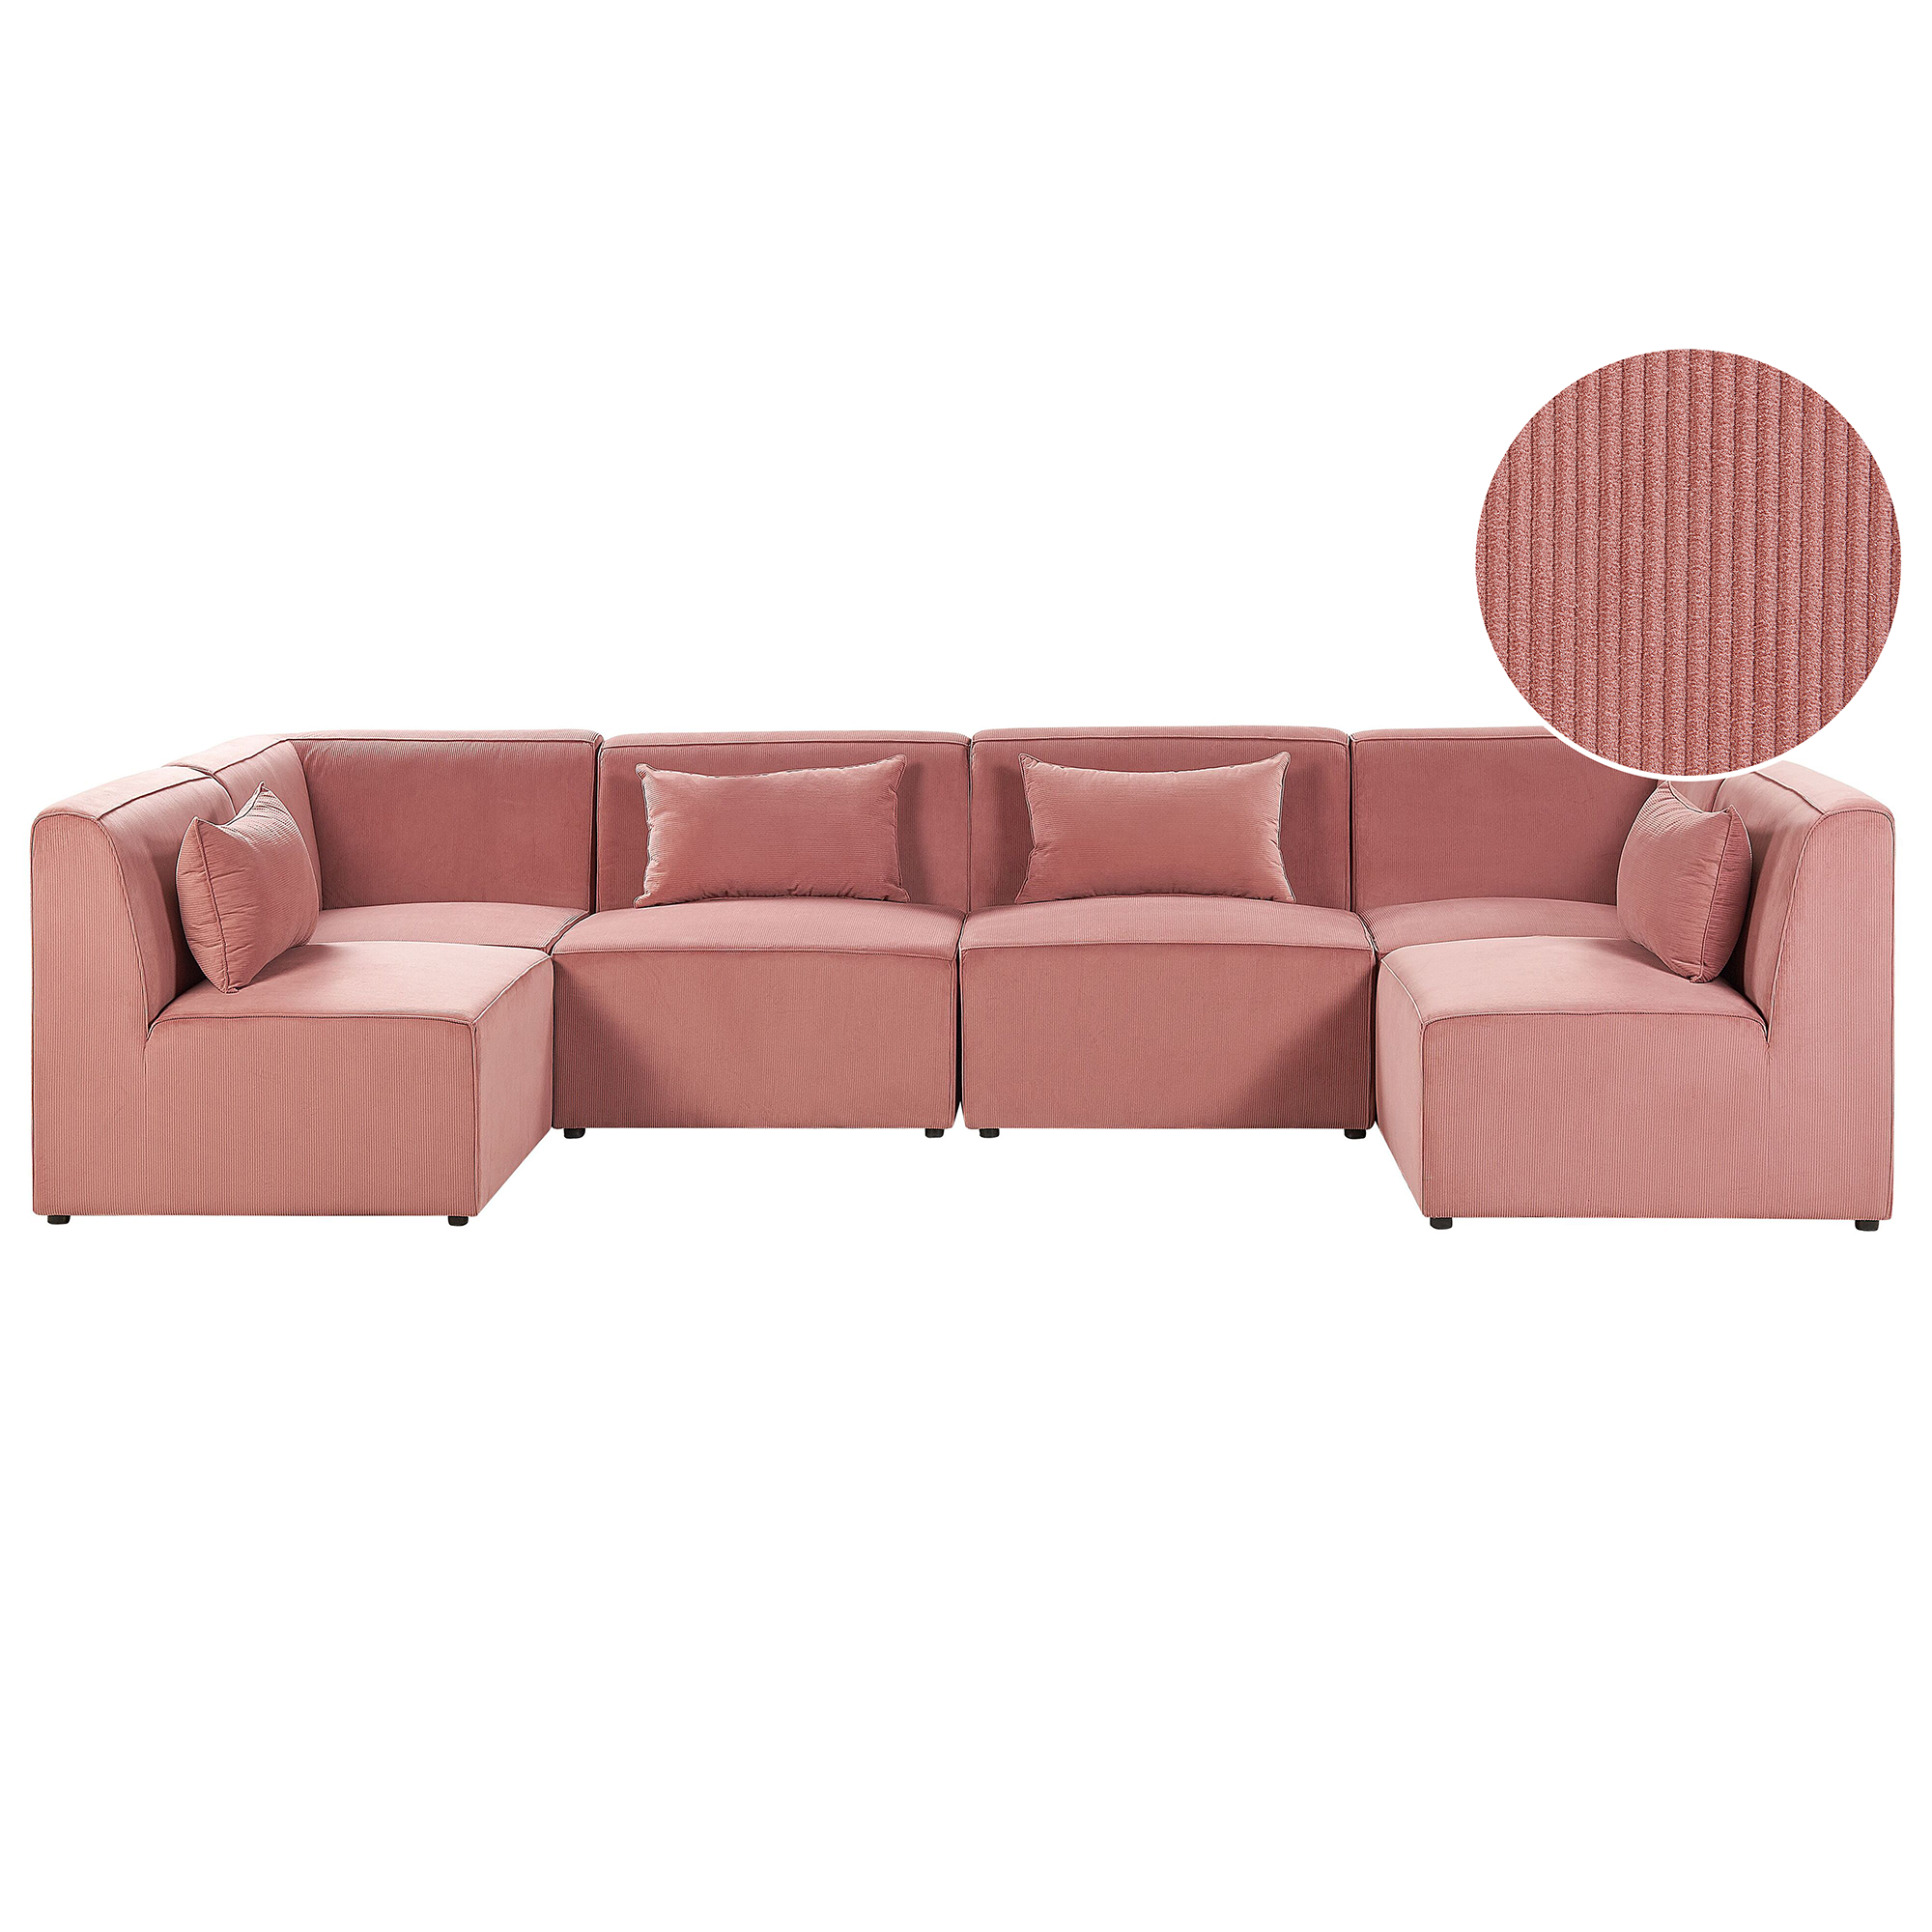 Beliani Modular Corner Sofa Pink Corduroy 6 Seater Sectional Sofa U-Shaped Modern Design